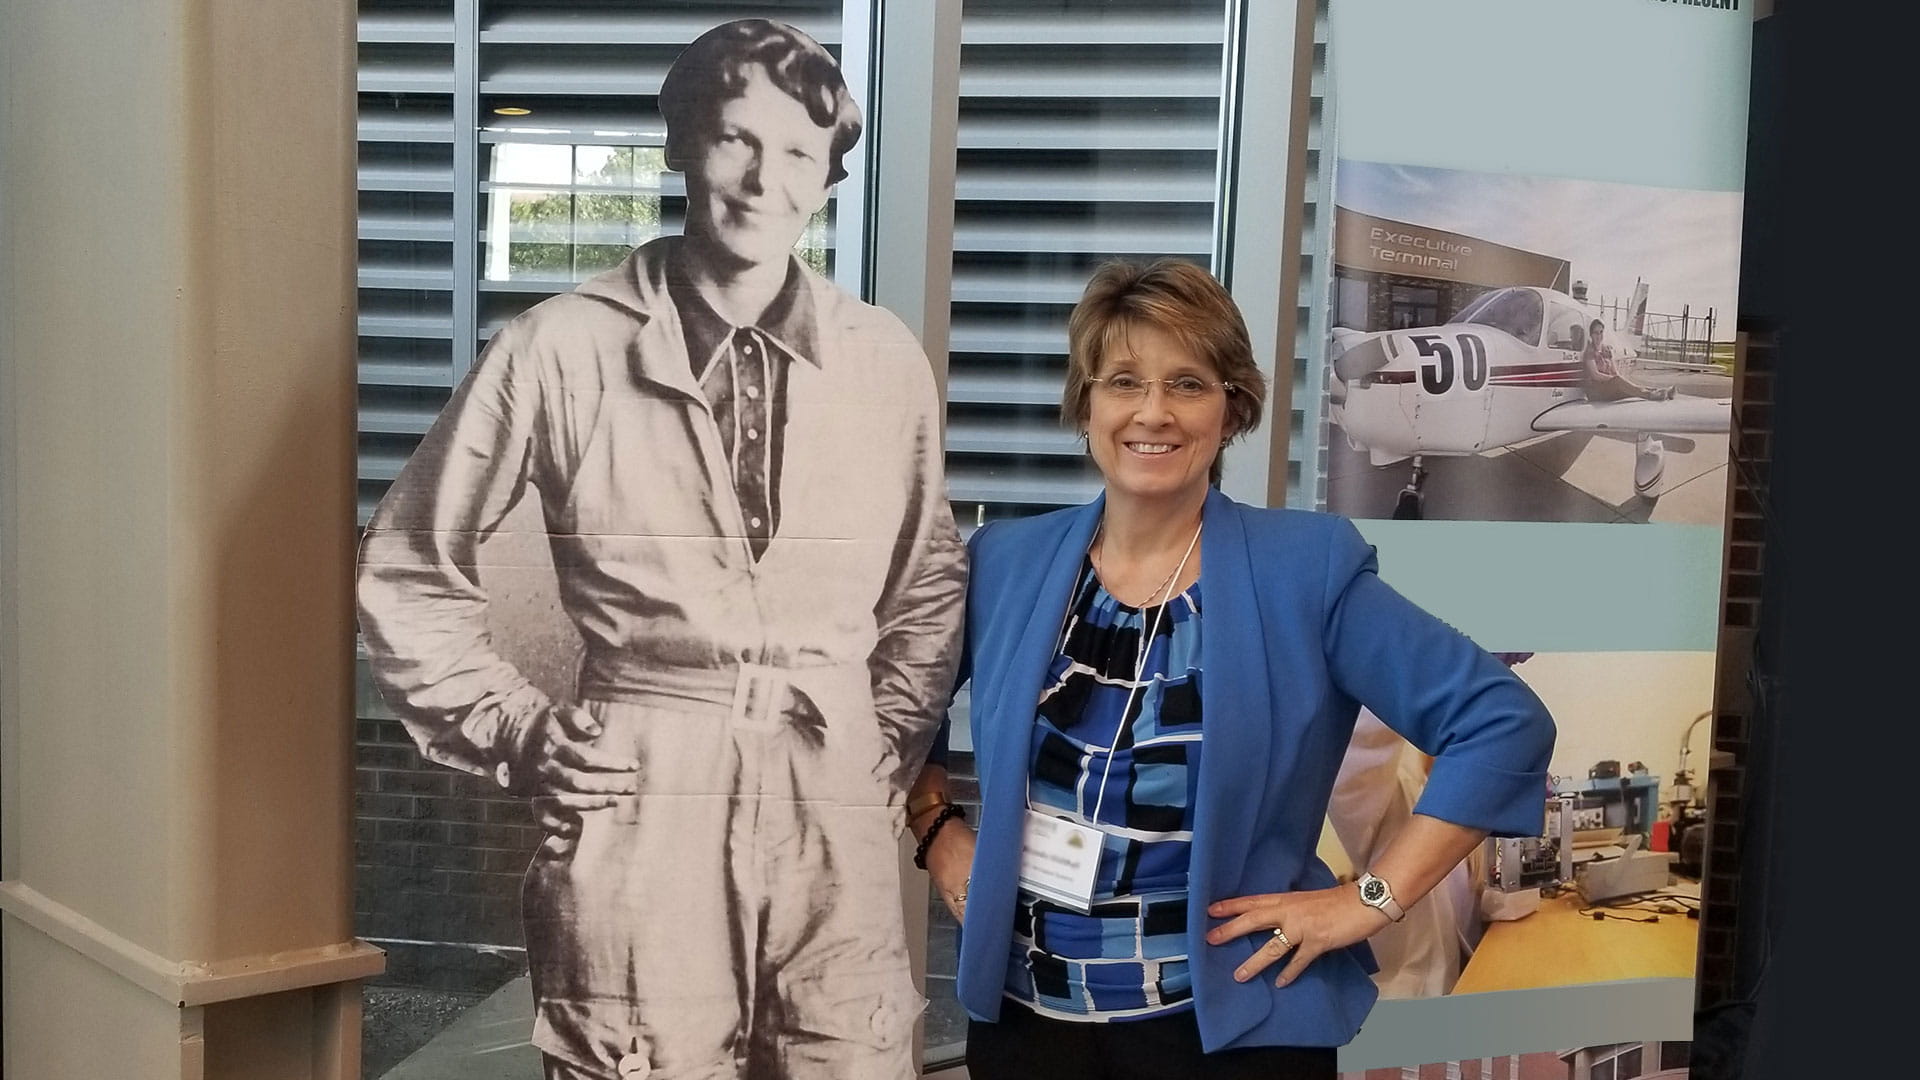 Ronda Walthall standing next to Amelia Earhart American aviator post board